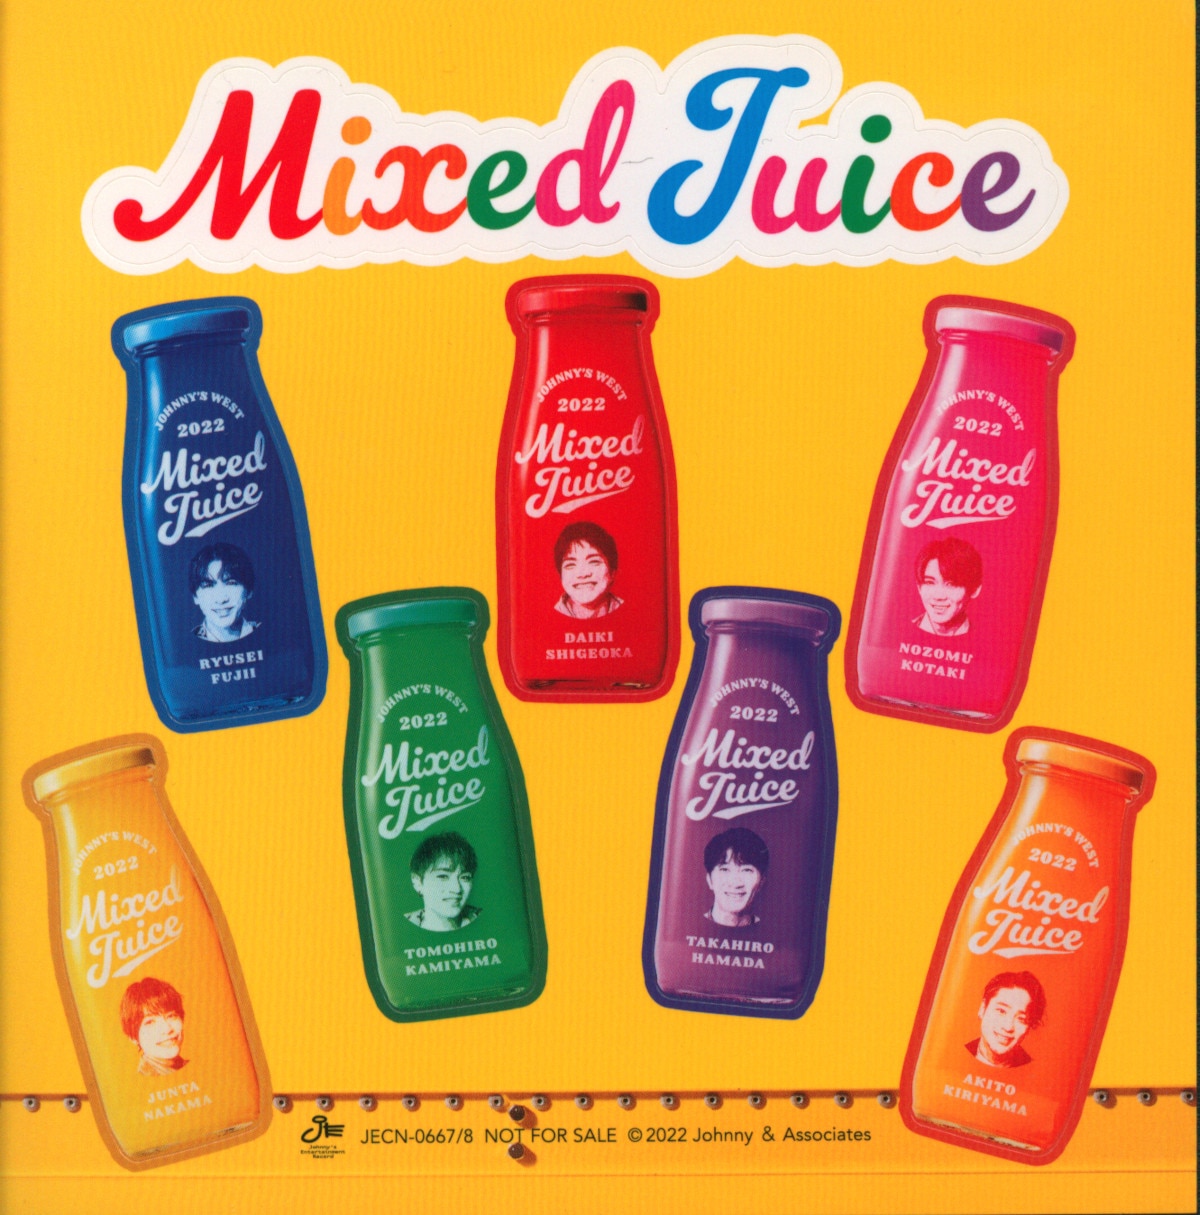 Mixed Juice